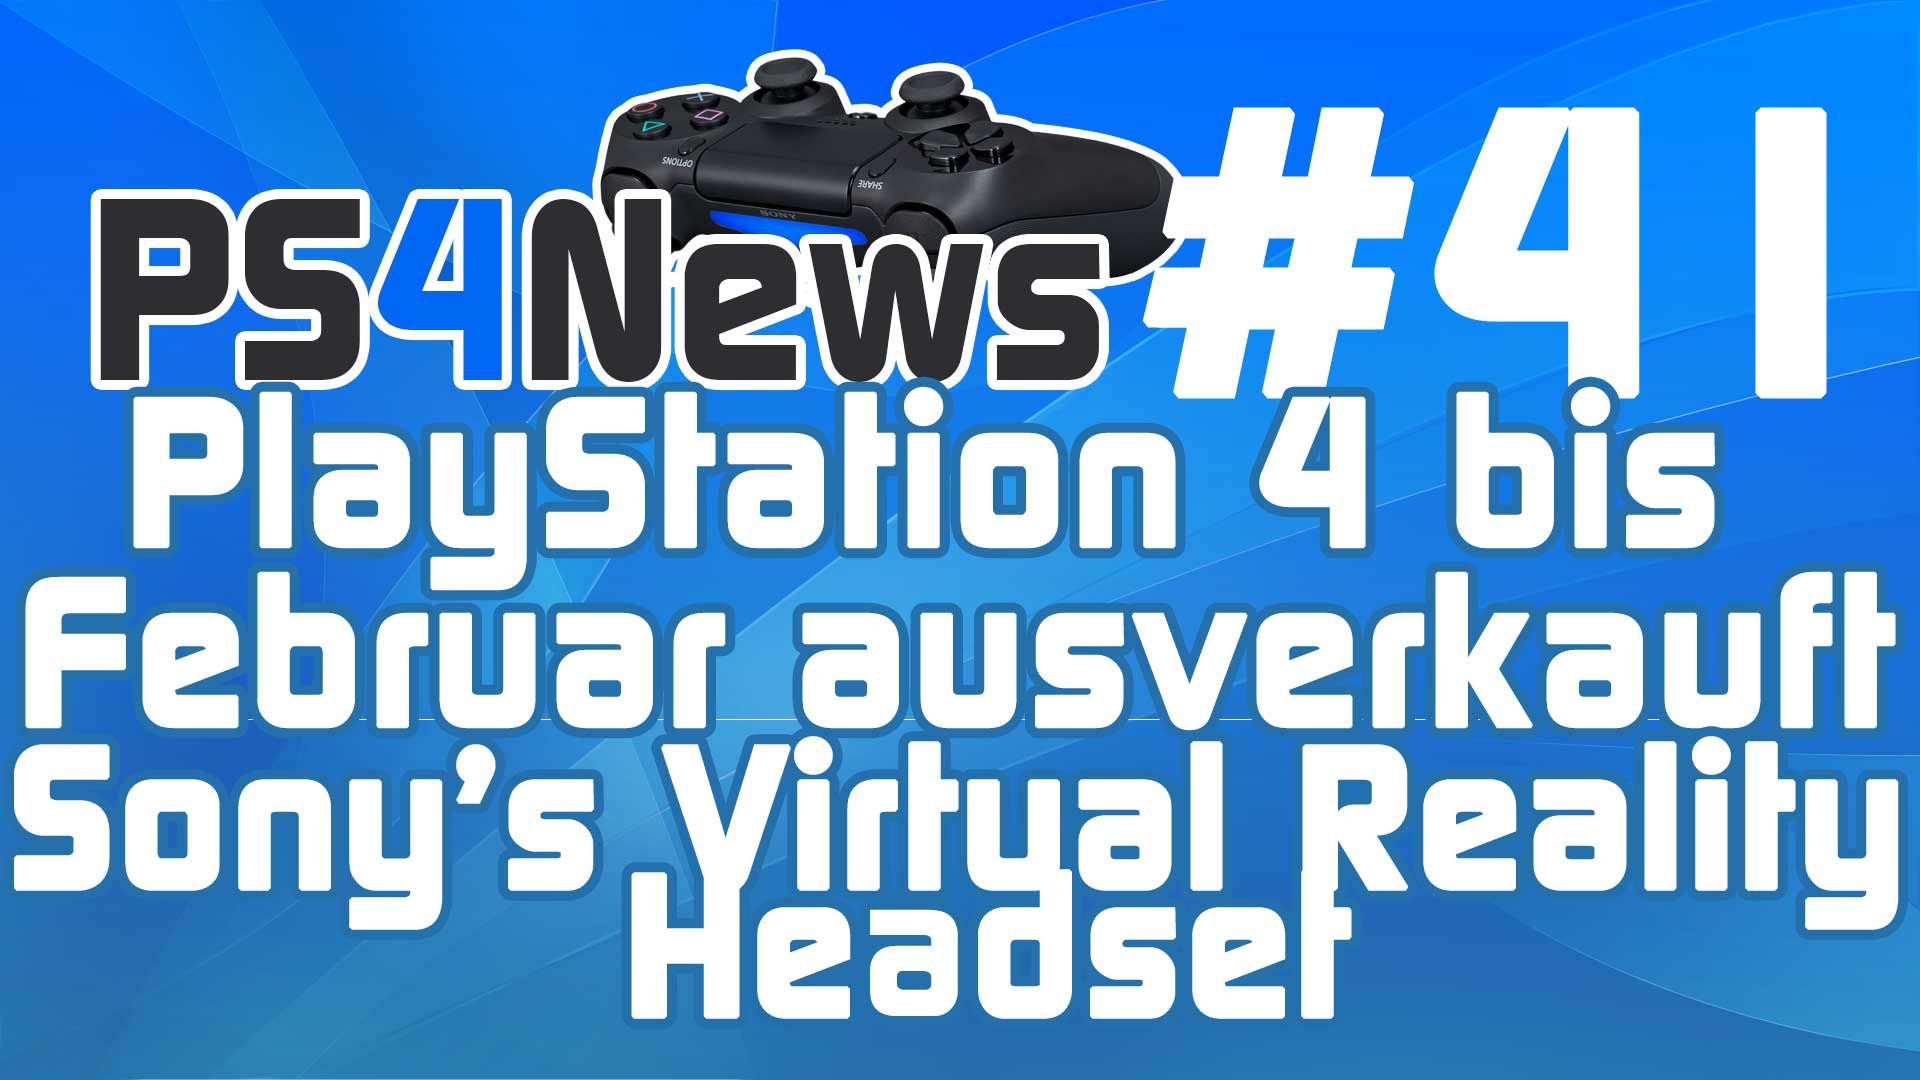 Sony’s Virtual Reality Headset, Killzone kostenlos ausprobieren, PS4 erst ab Februar im Handel uvm.